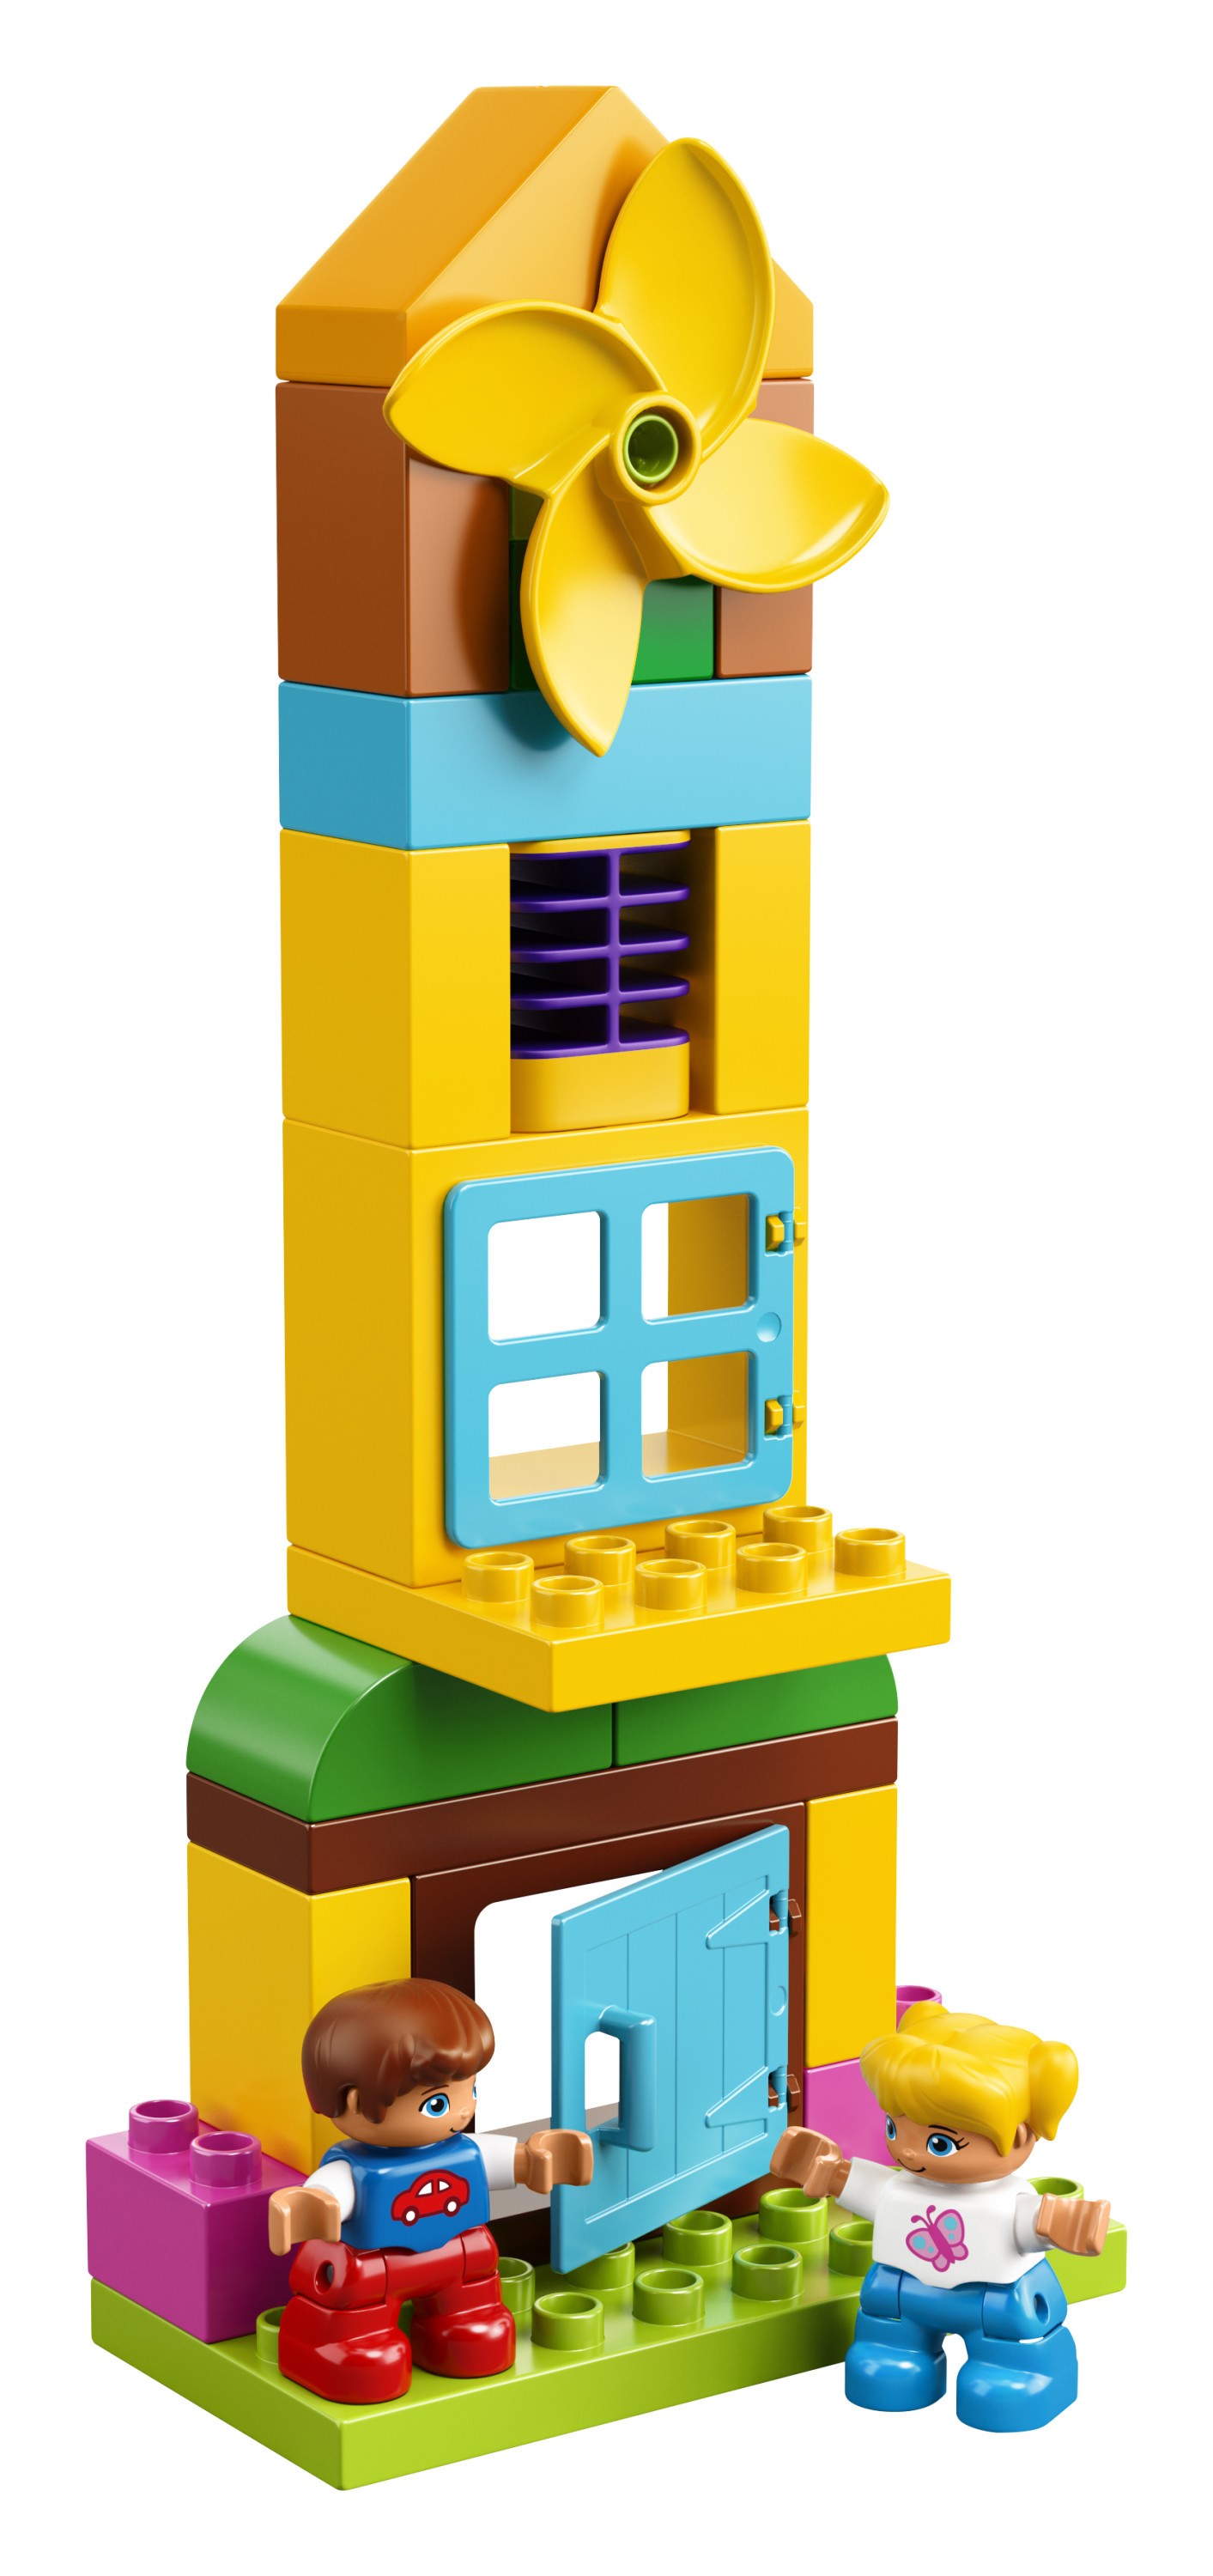 LEGO DUPLO My First Large Playground Brick Box 10864 - image 2 of 5